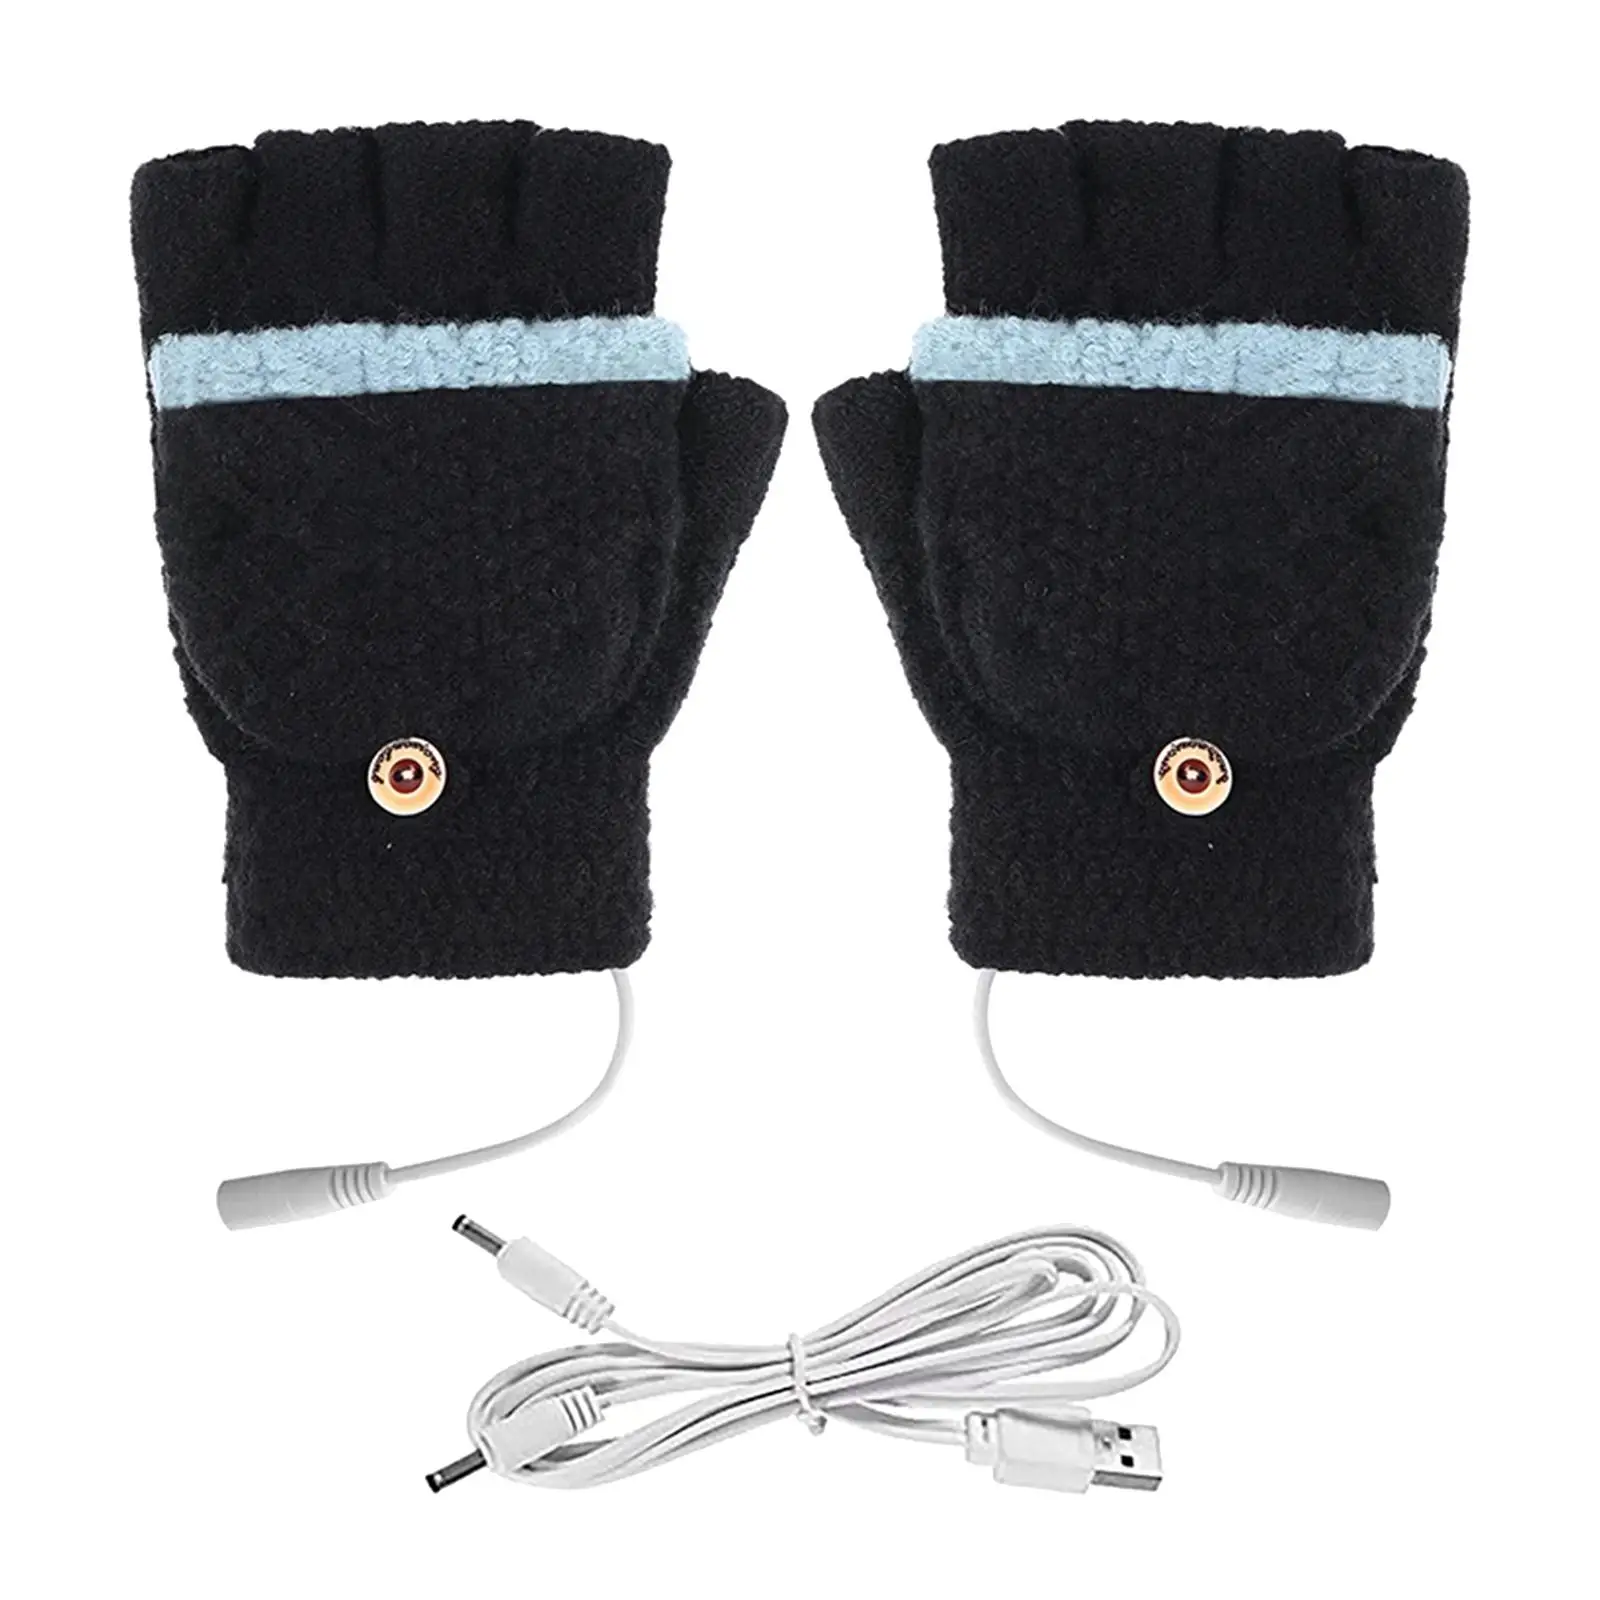 Heated Gloves for Men Women, Rechargeable Electric Heated Gloves,Heated Skiing Gloves and Snowboarding Gloves for Kids